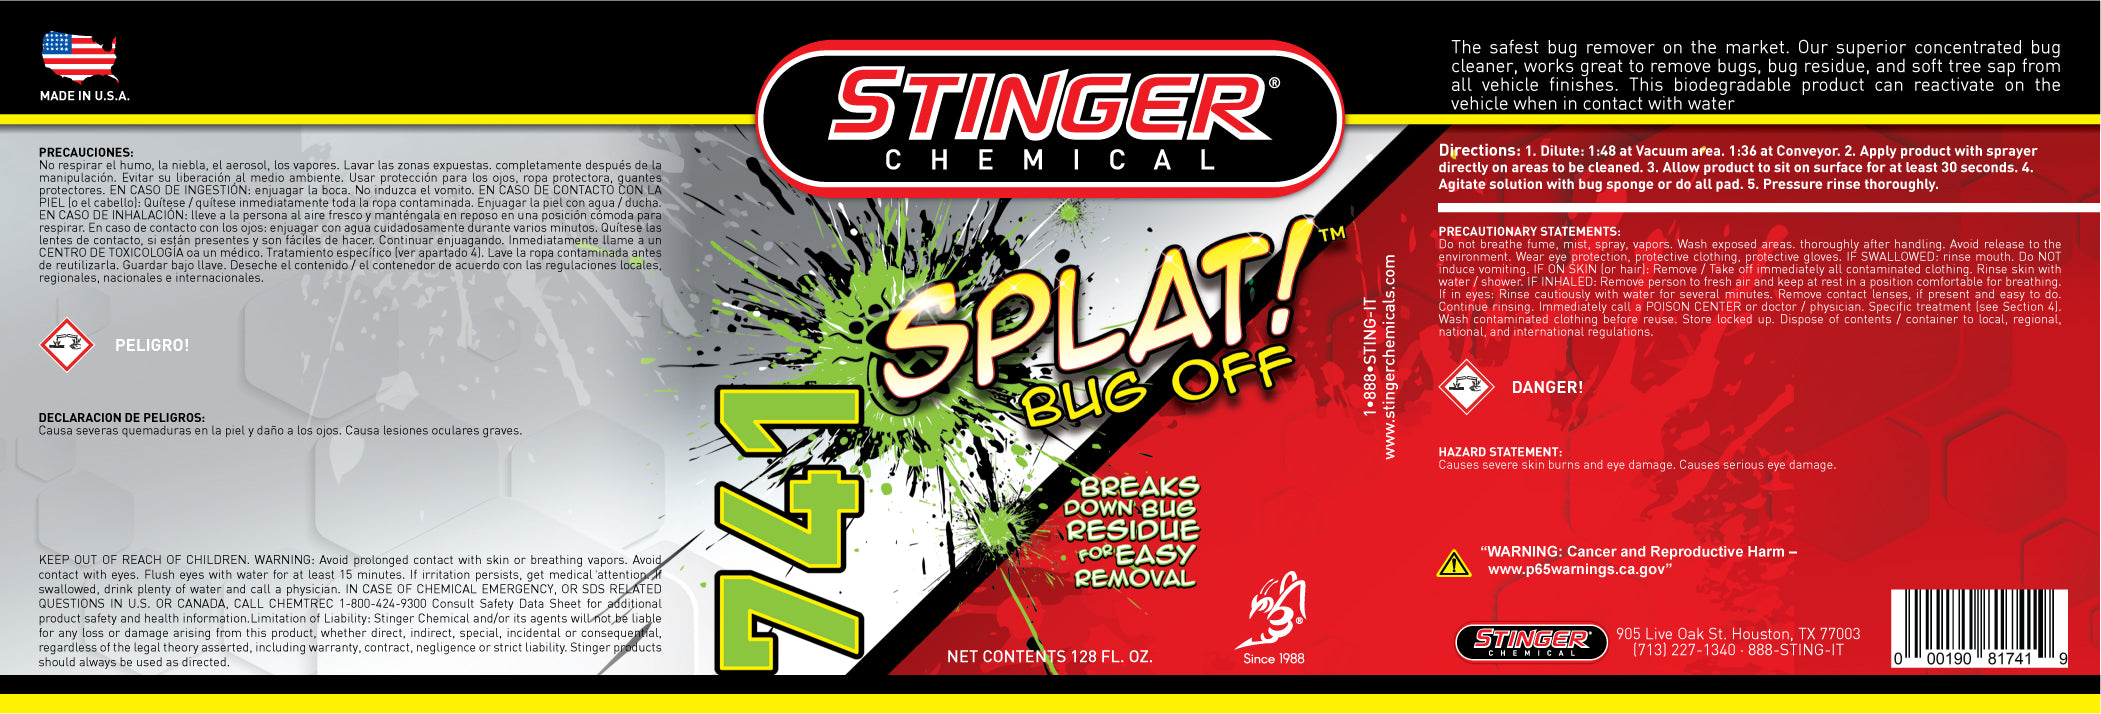 stinger-741-label